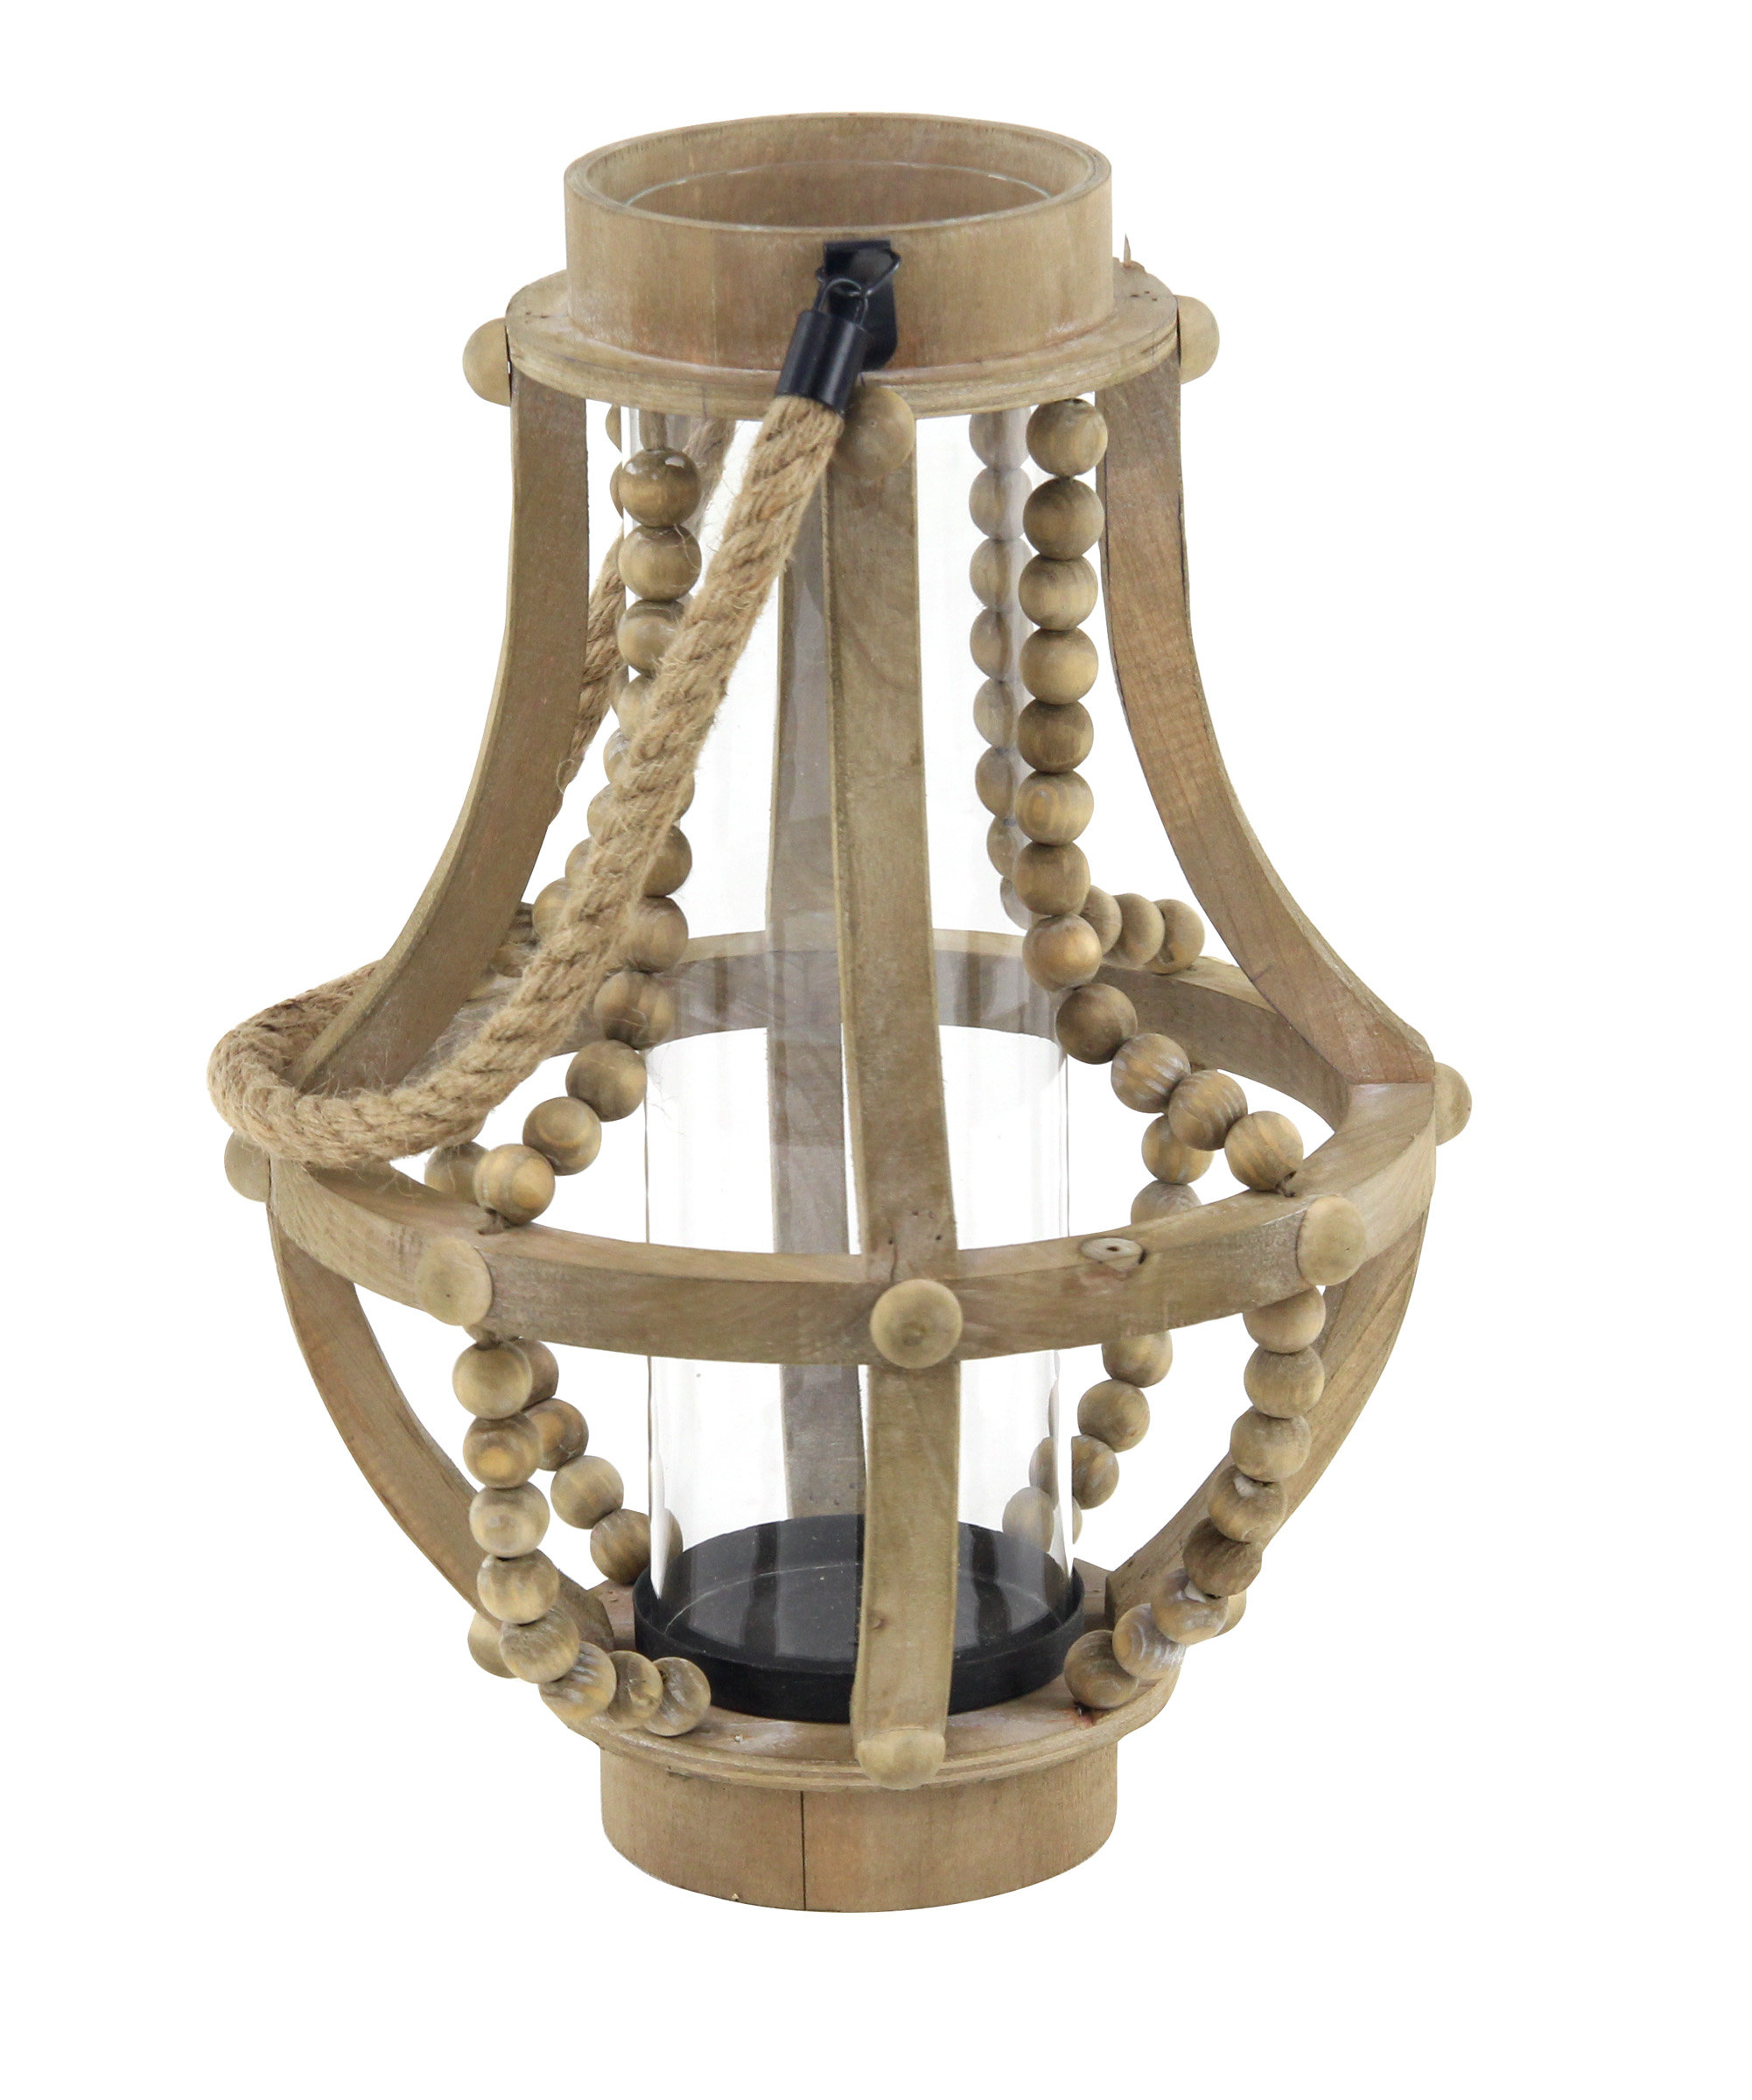 Vintage Wood Metal Lantern Candle Light Holder Romantic Rustic Decor Collectible 